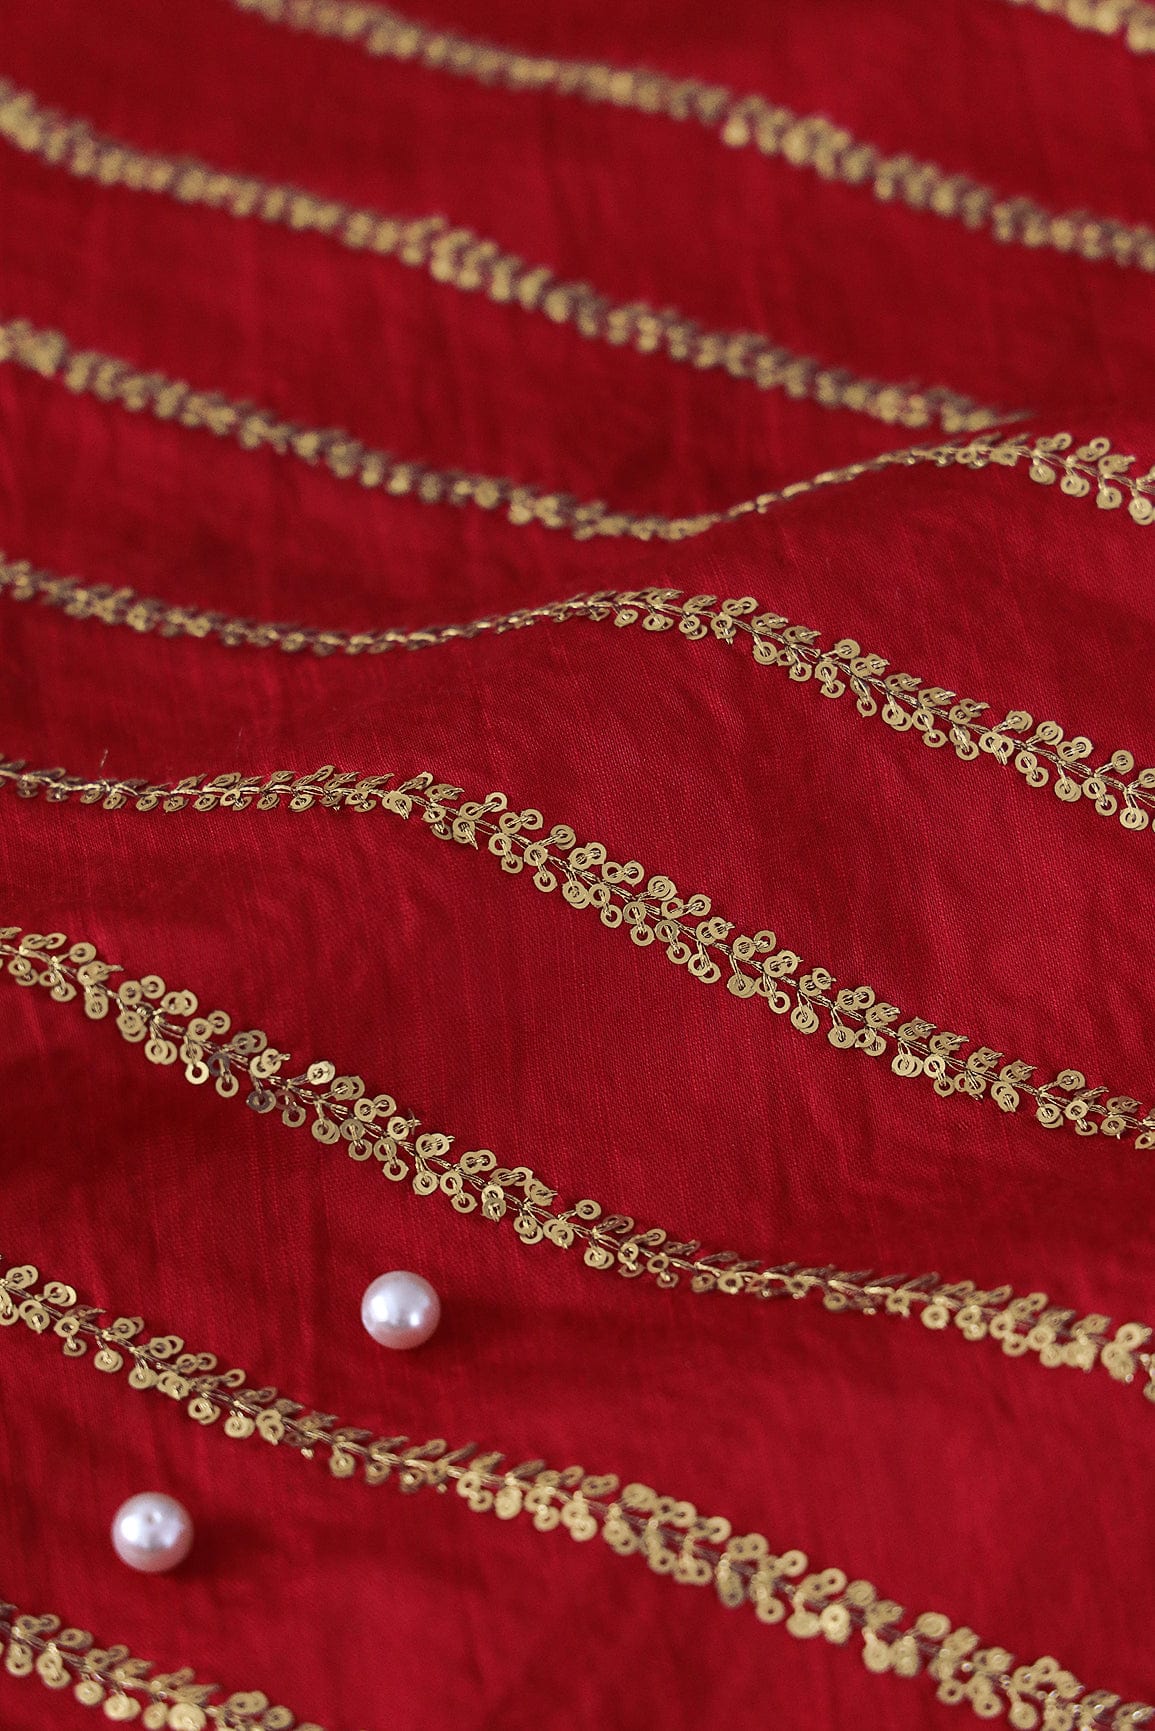 doeraa SUIT SETS Red And Beige Unstitched Suit (3 Piece)